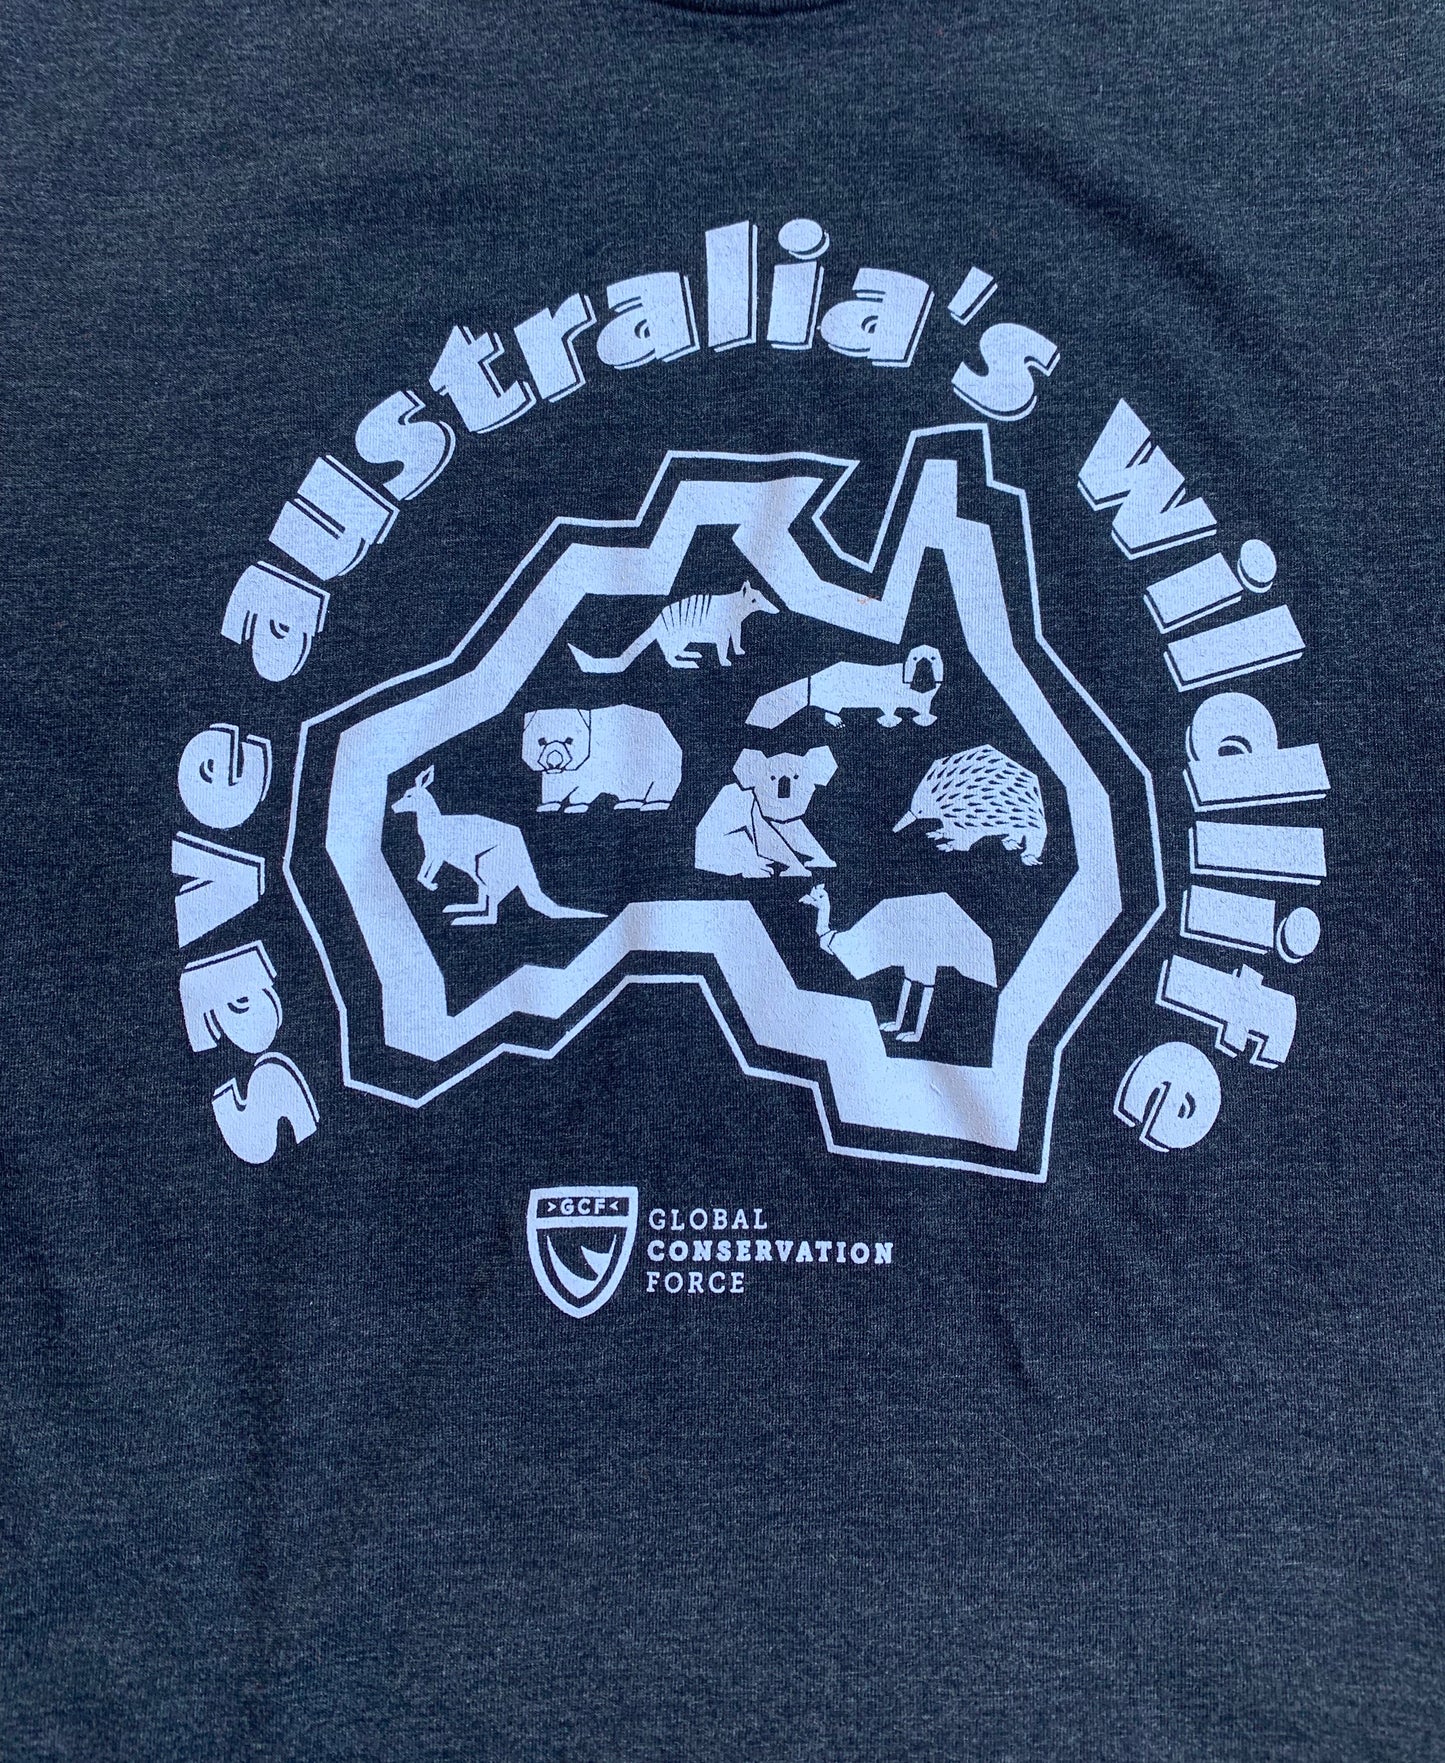 Save Australia’s Wildlife - Shirt